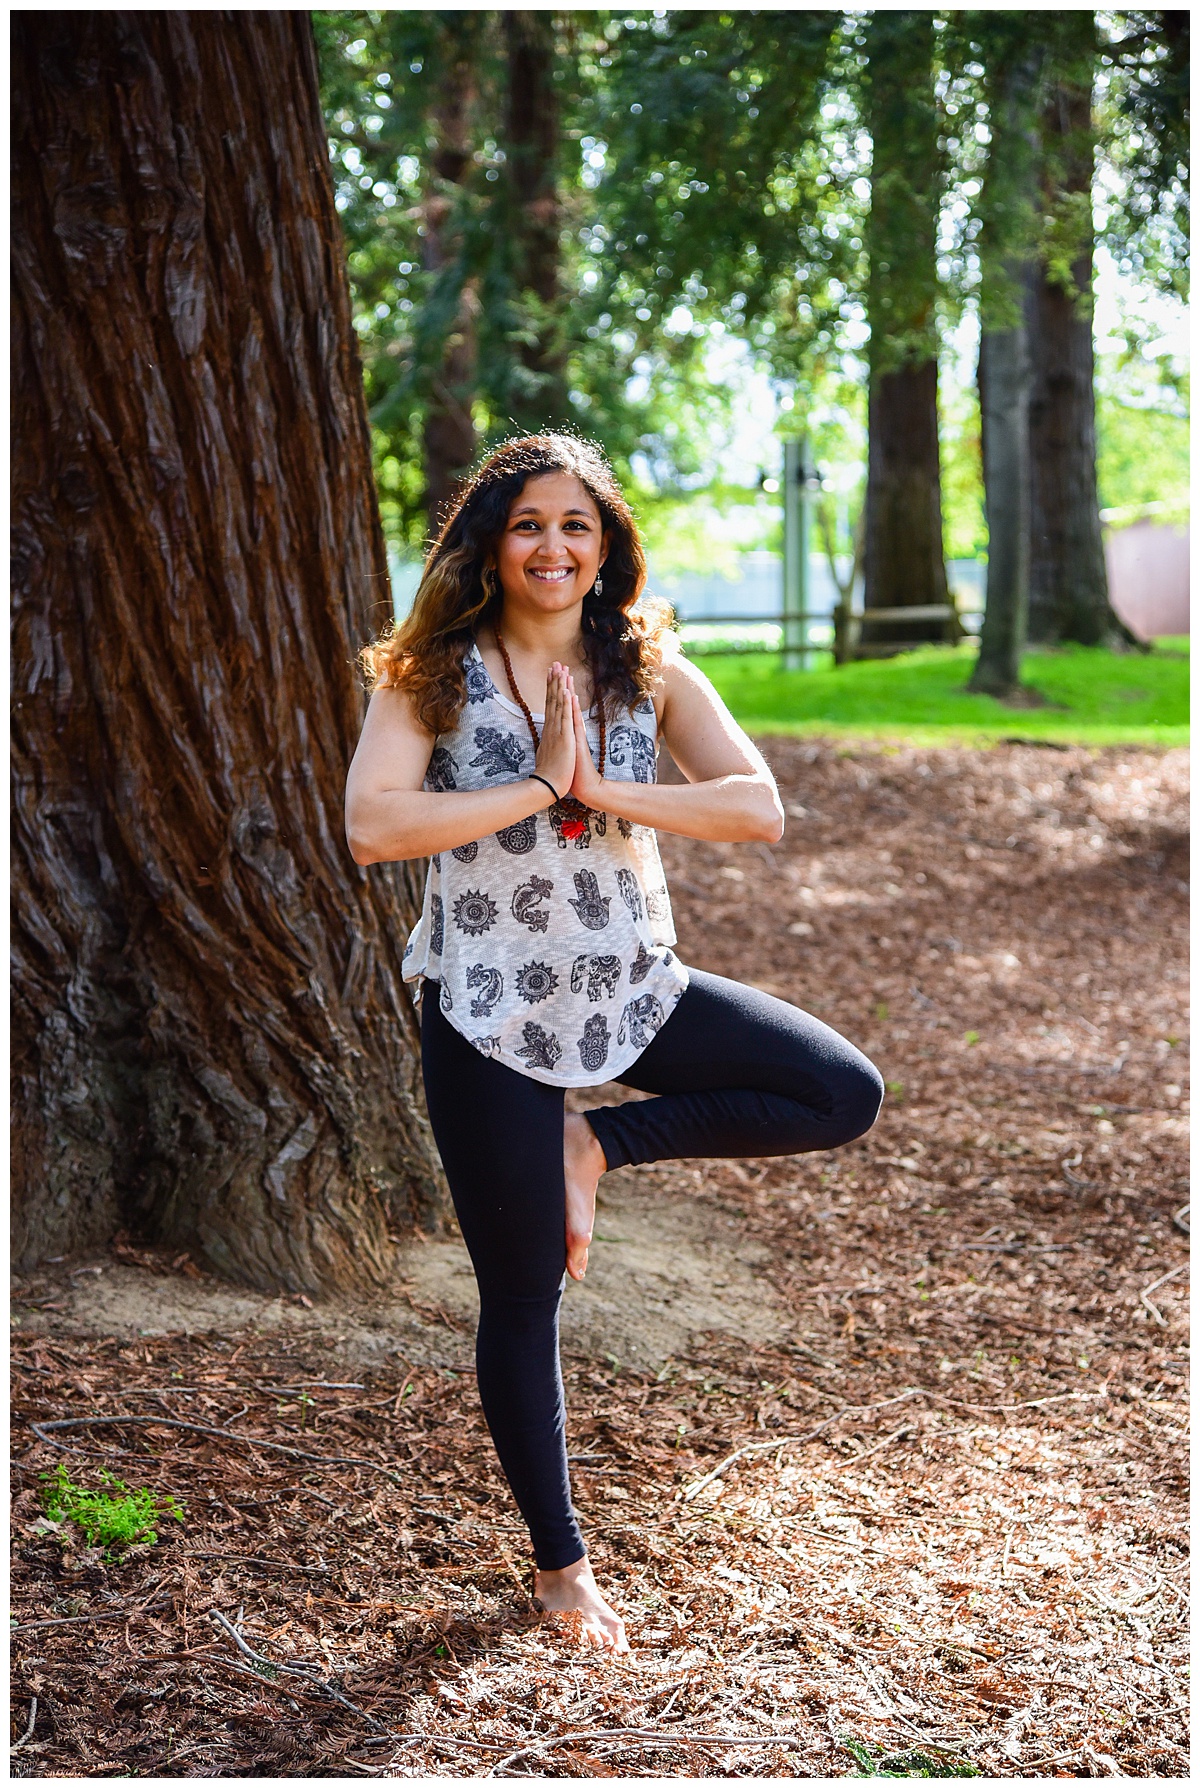 Woman doing yoga tree pose under redwood trees